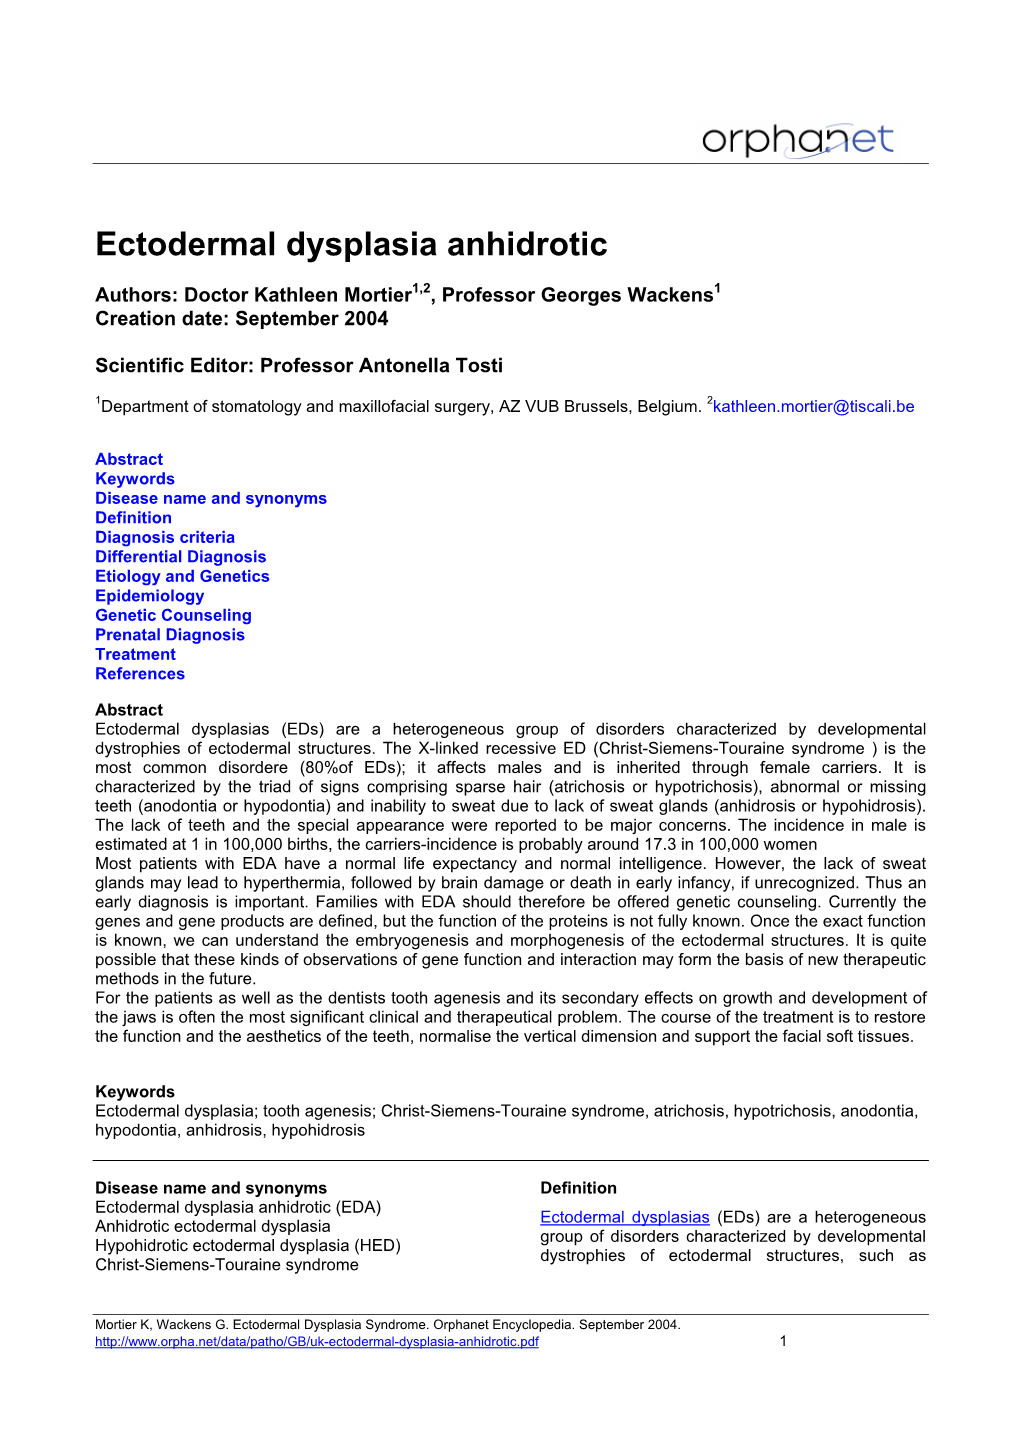 Ectodermal Dysplasia Anhidrotic